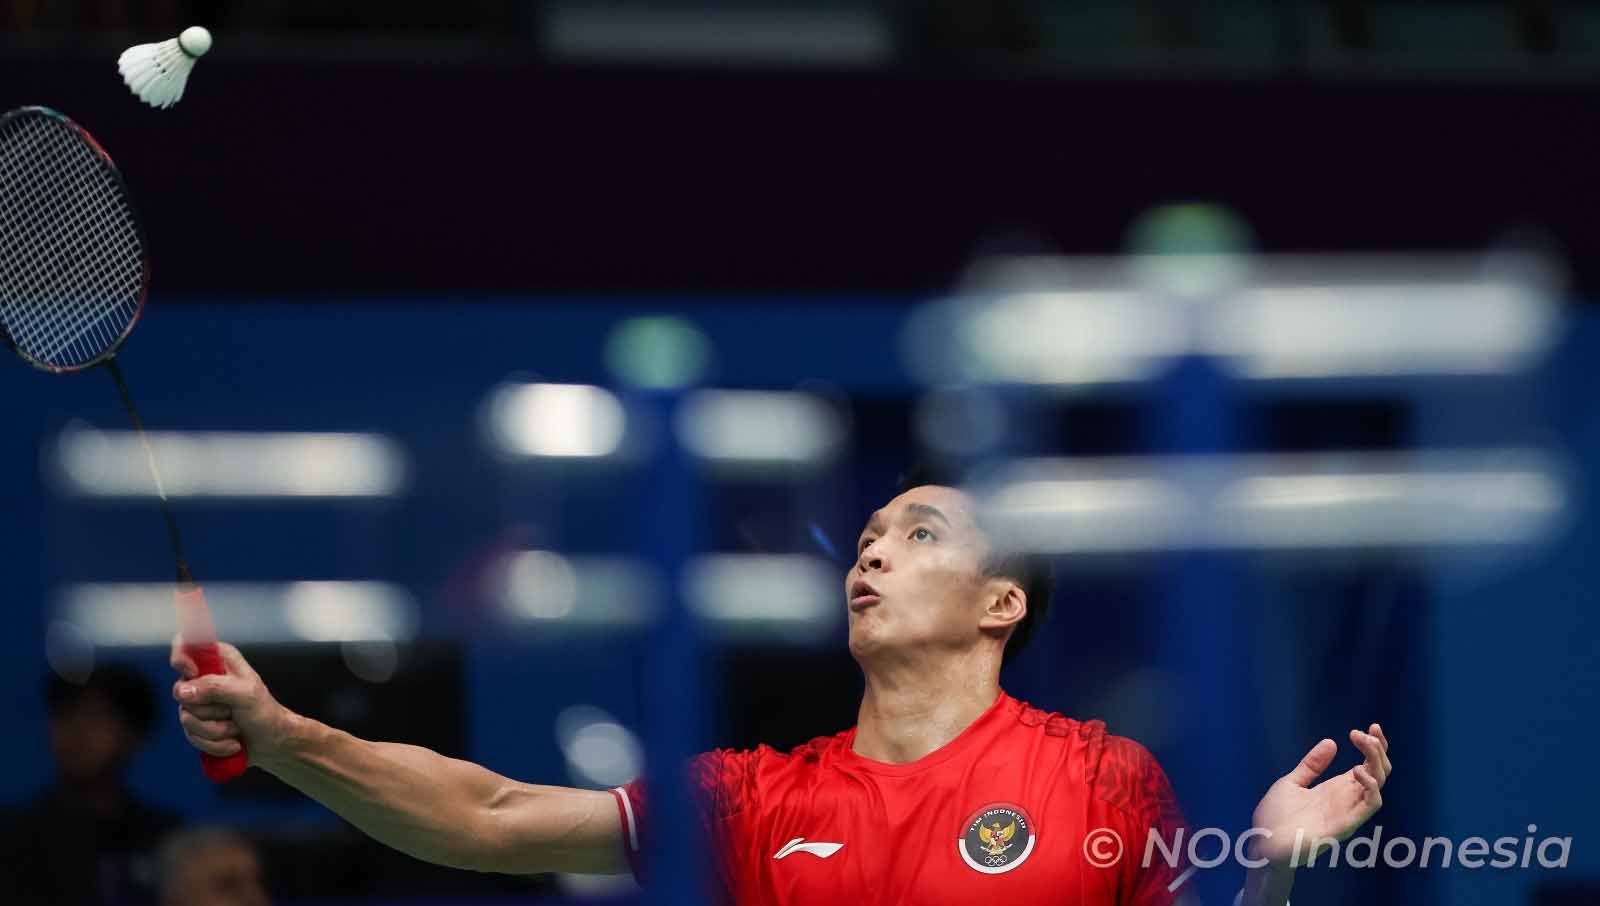 Tunggal putra Indonesia, Jonatan Christie di Asian Games (Foto: NOC Indonesia / Naif Al'as) Copyright: © NOC Indonesia/Naif Al’As